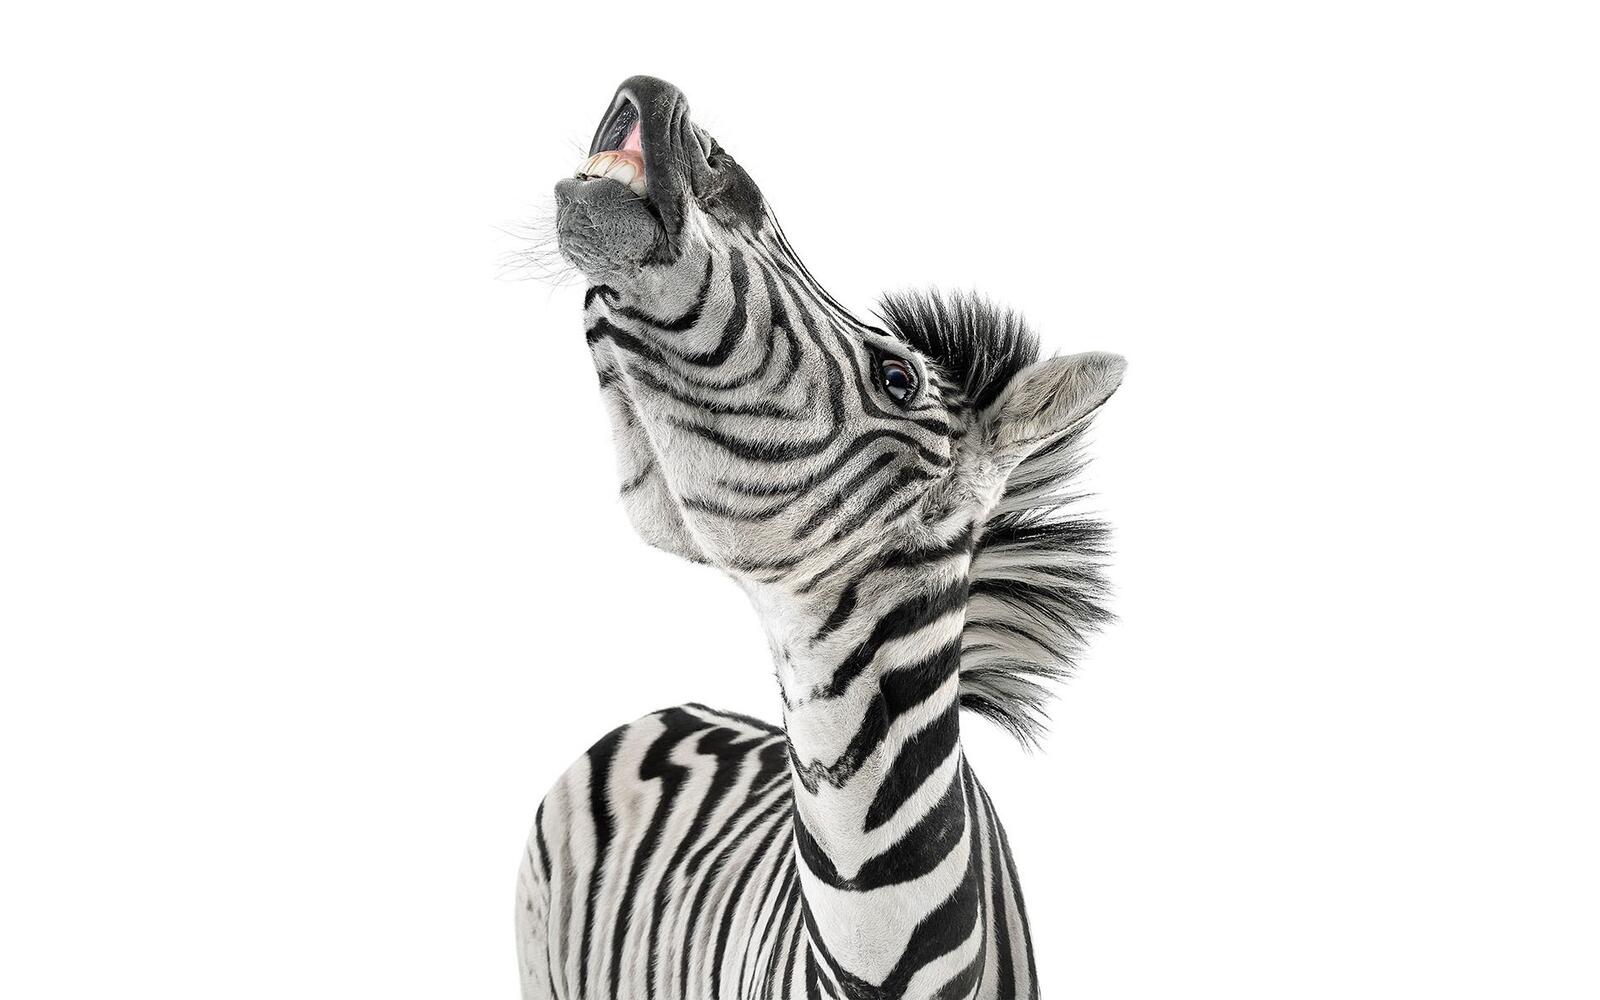 Wallpapers face striped zebra on the desktop